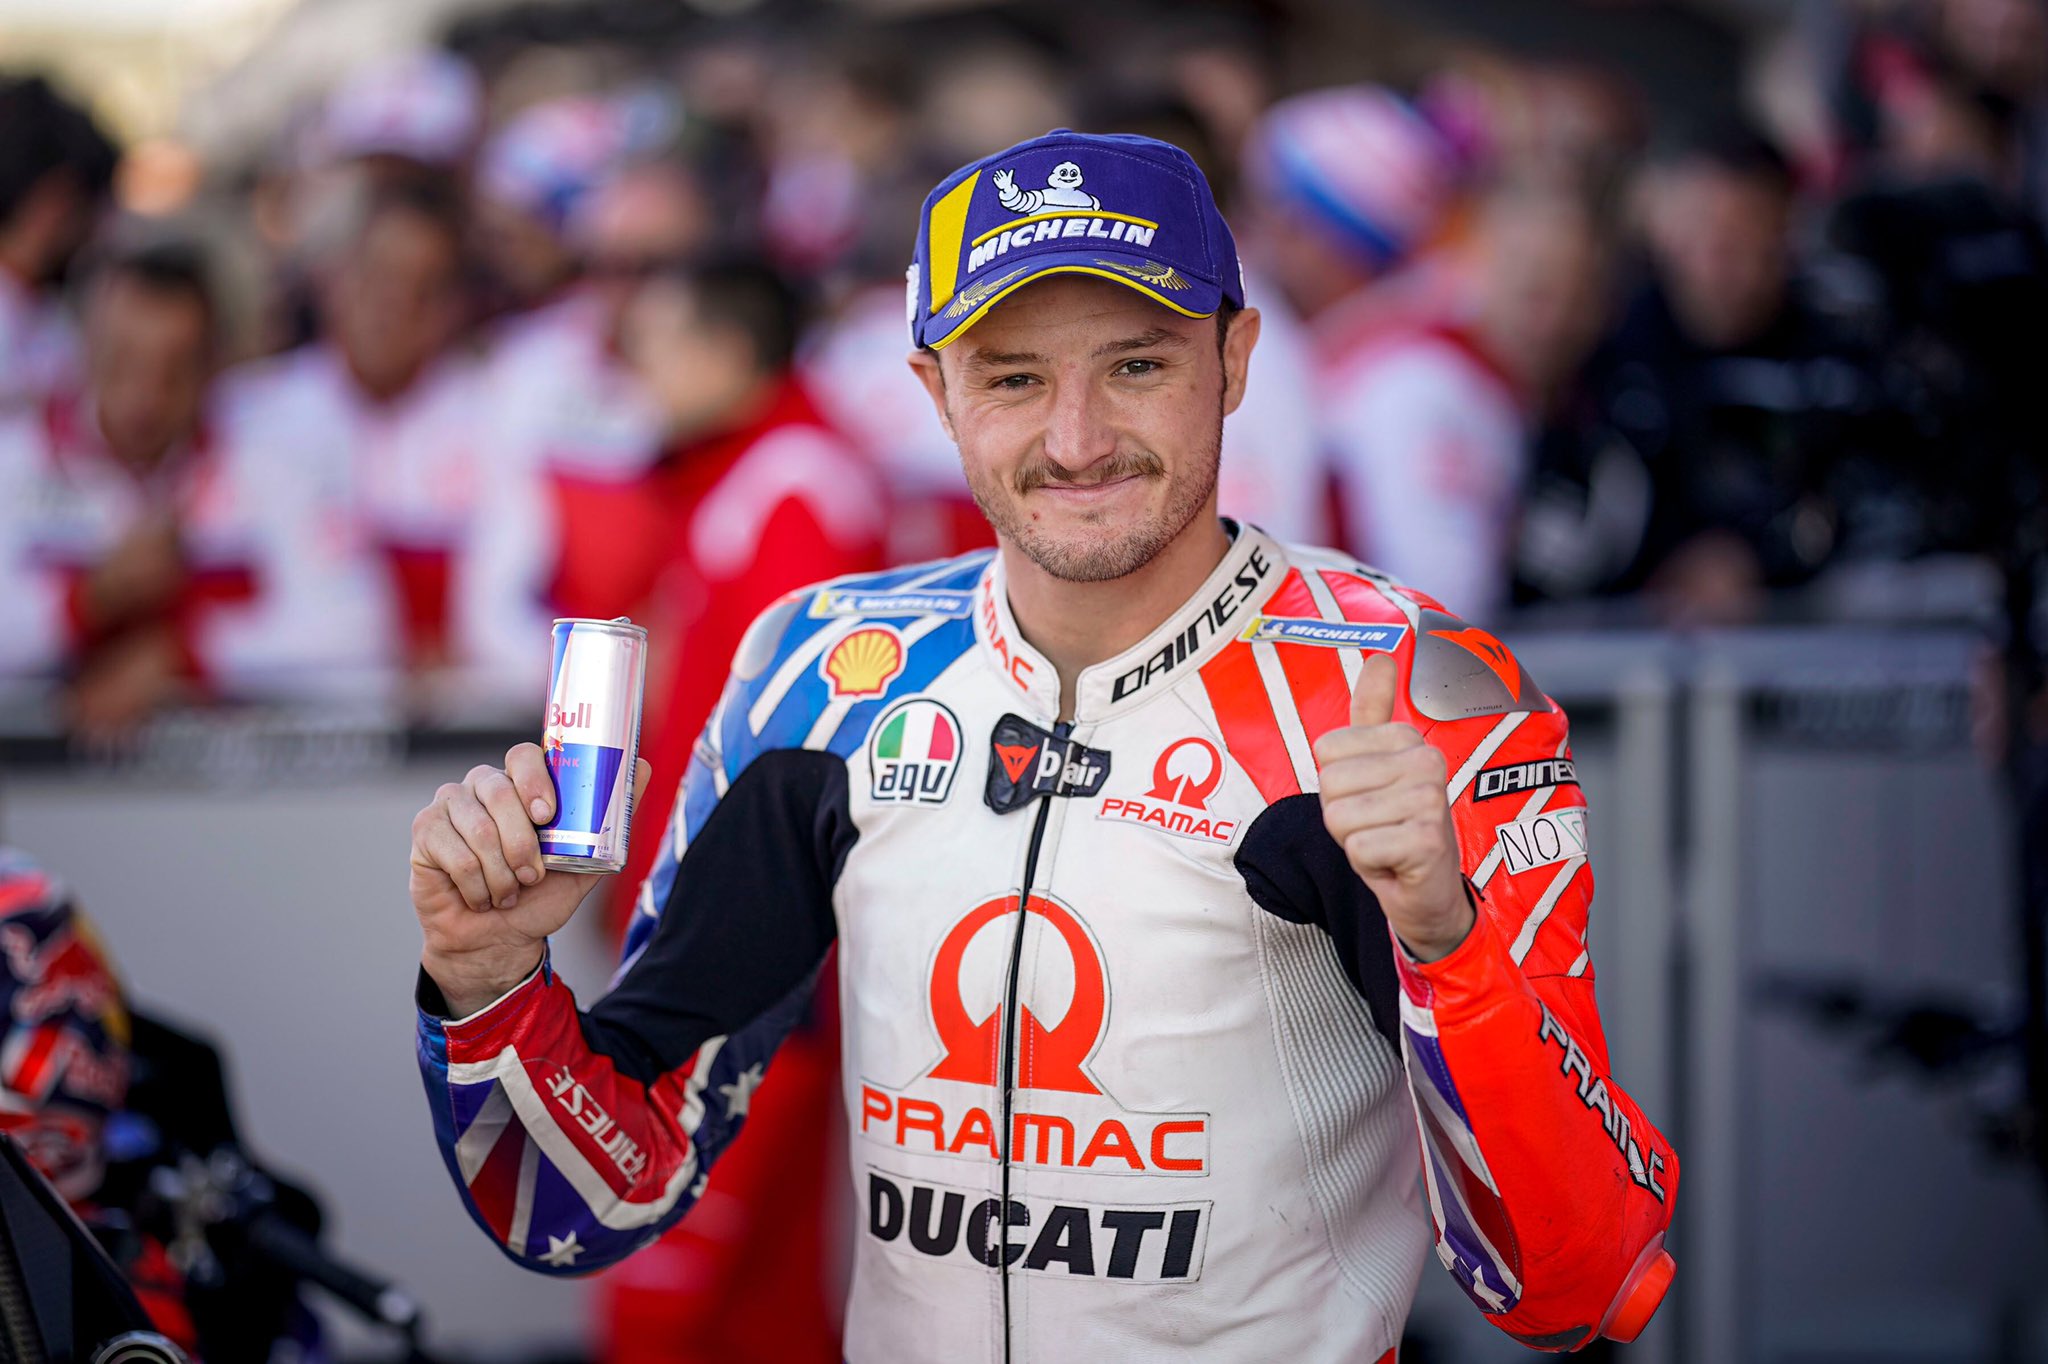 Jack Miller Dapat Promosi di Ducati, Daniel Ricciardo Kirim Pesan Dukungan